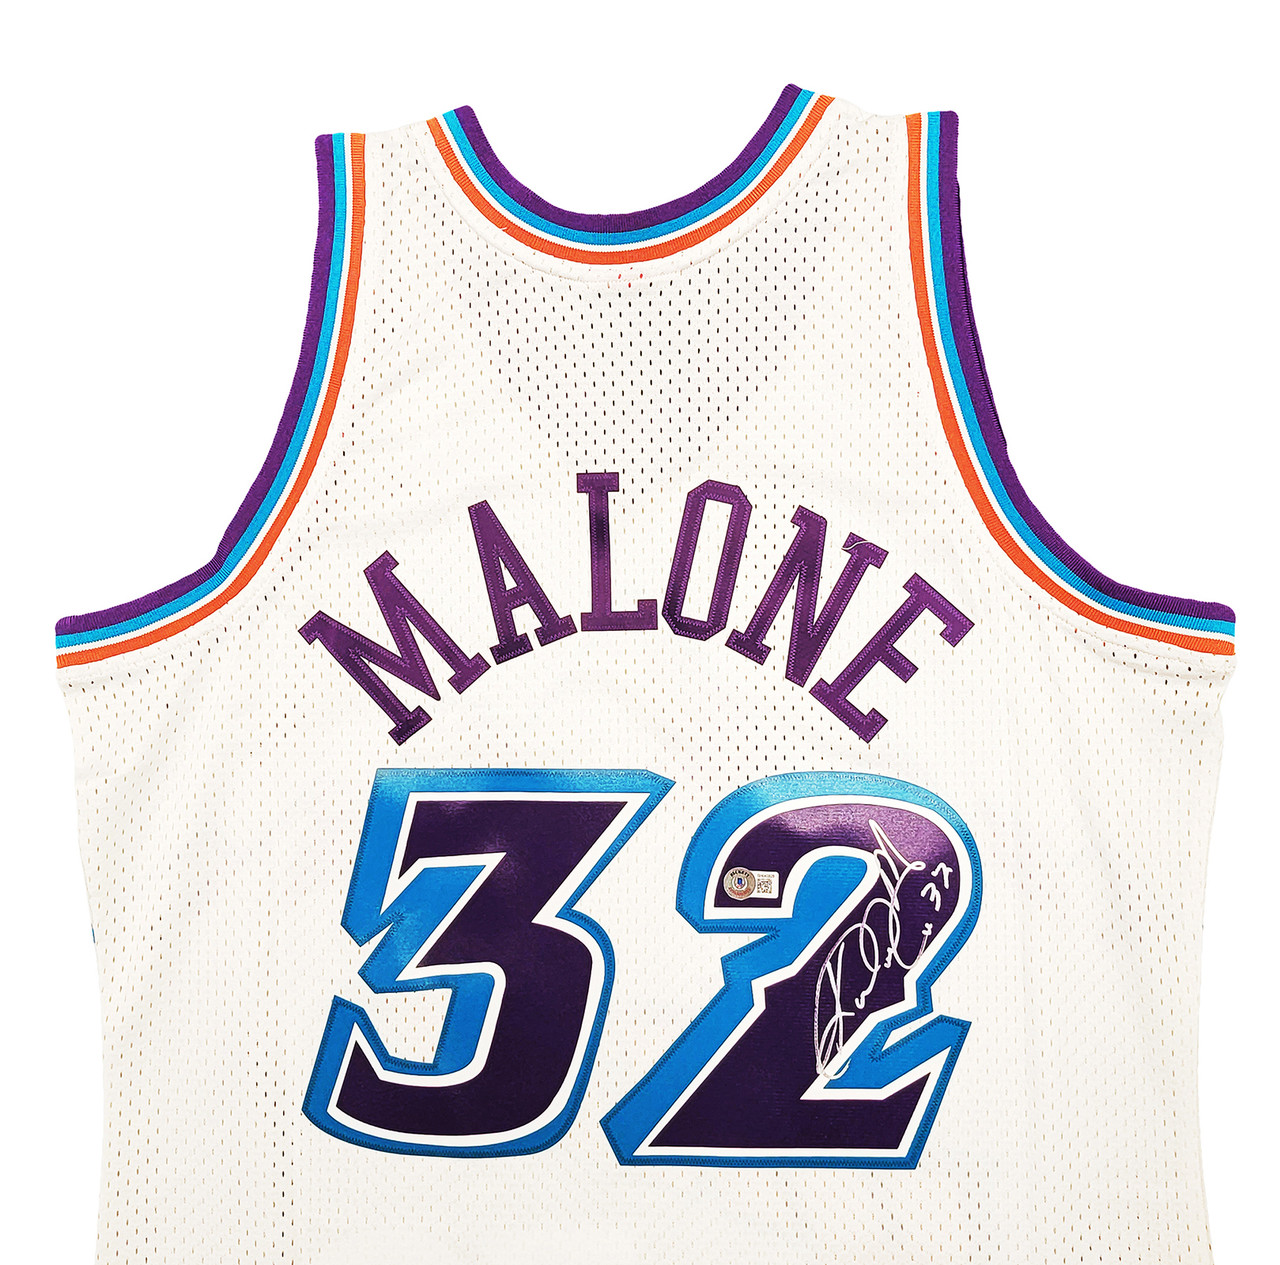 Utah Jazz Karl Malone Autographed Black Authentic Mitchell & Ness Jersey  Size XL Beckett BAS Witness Stock #211877